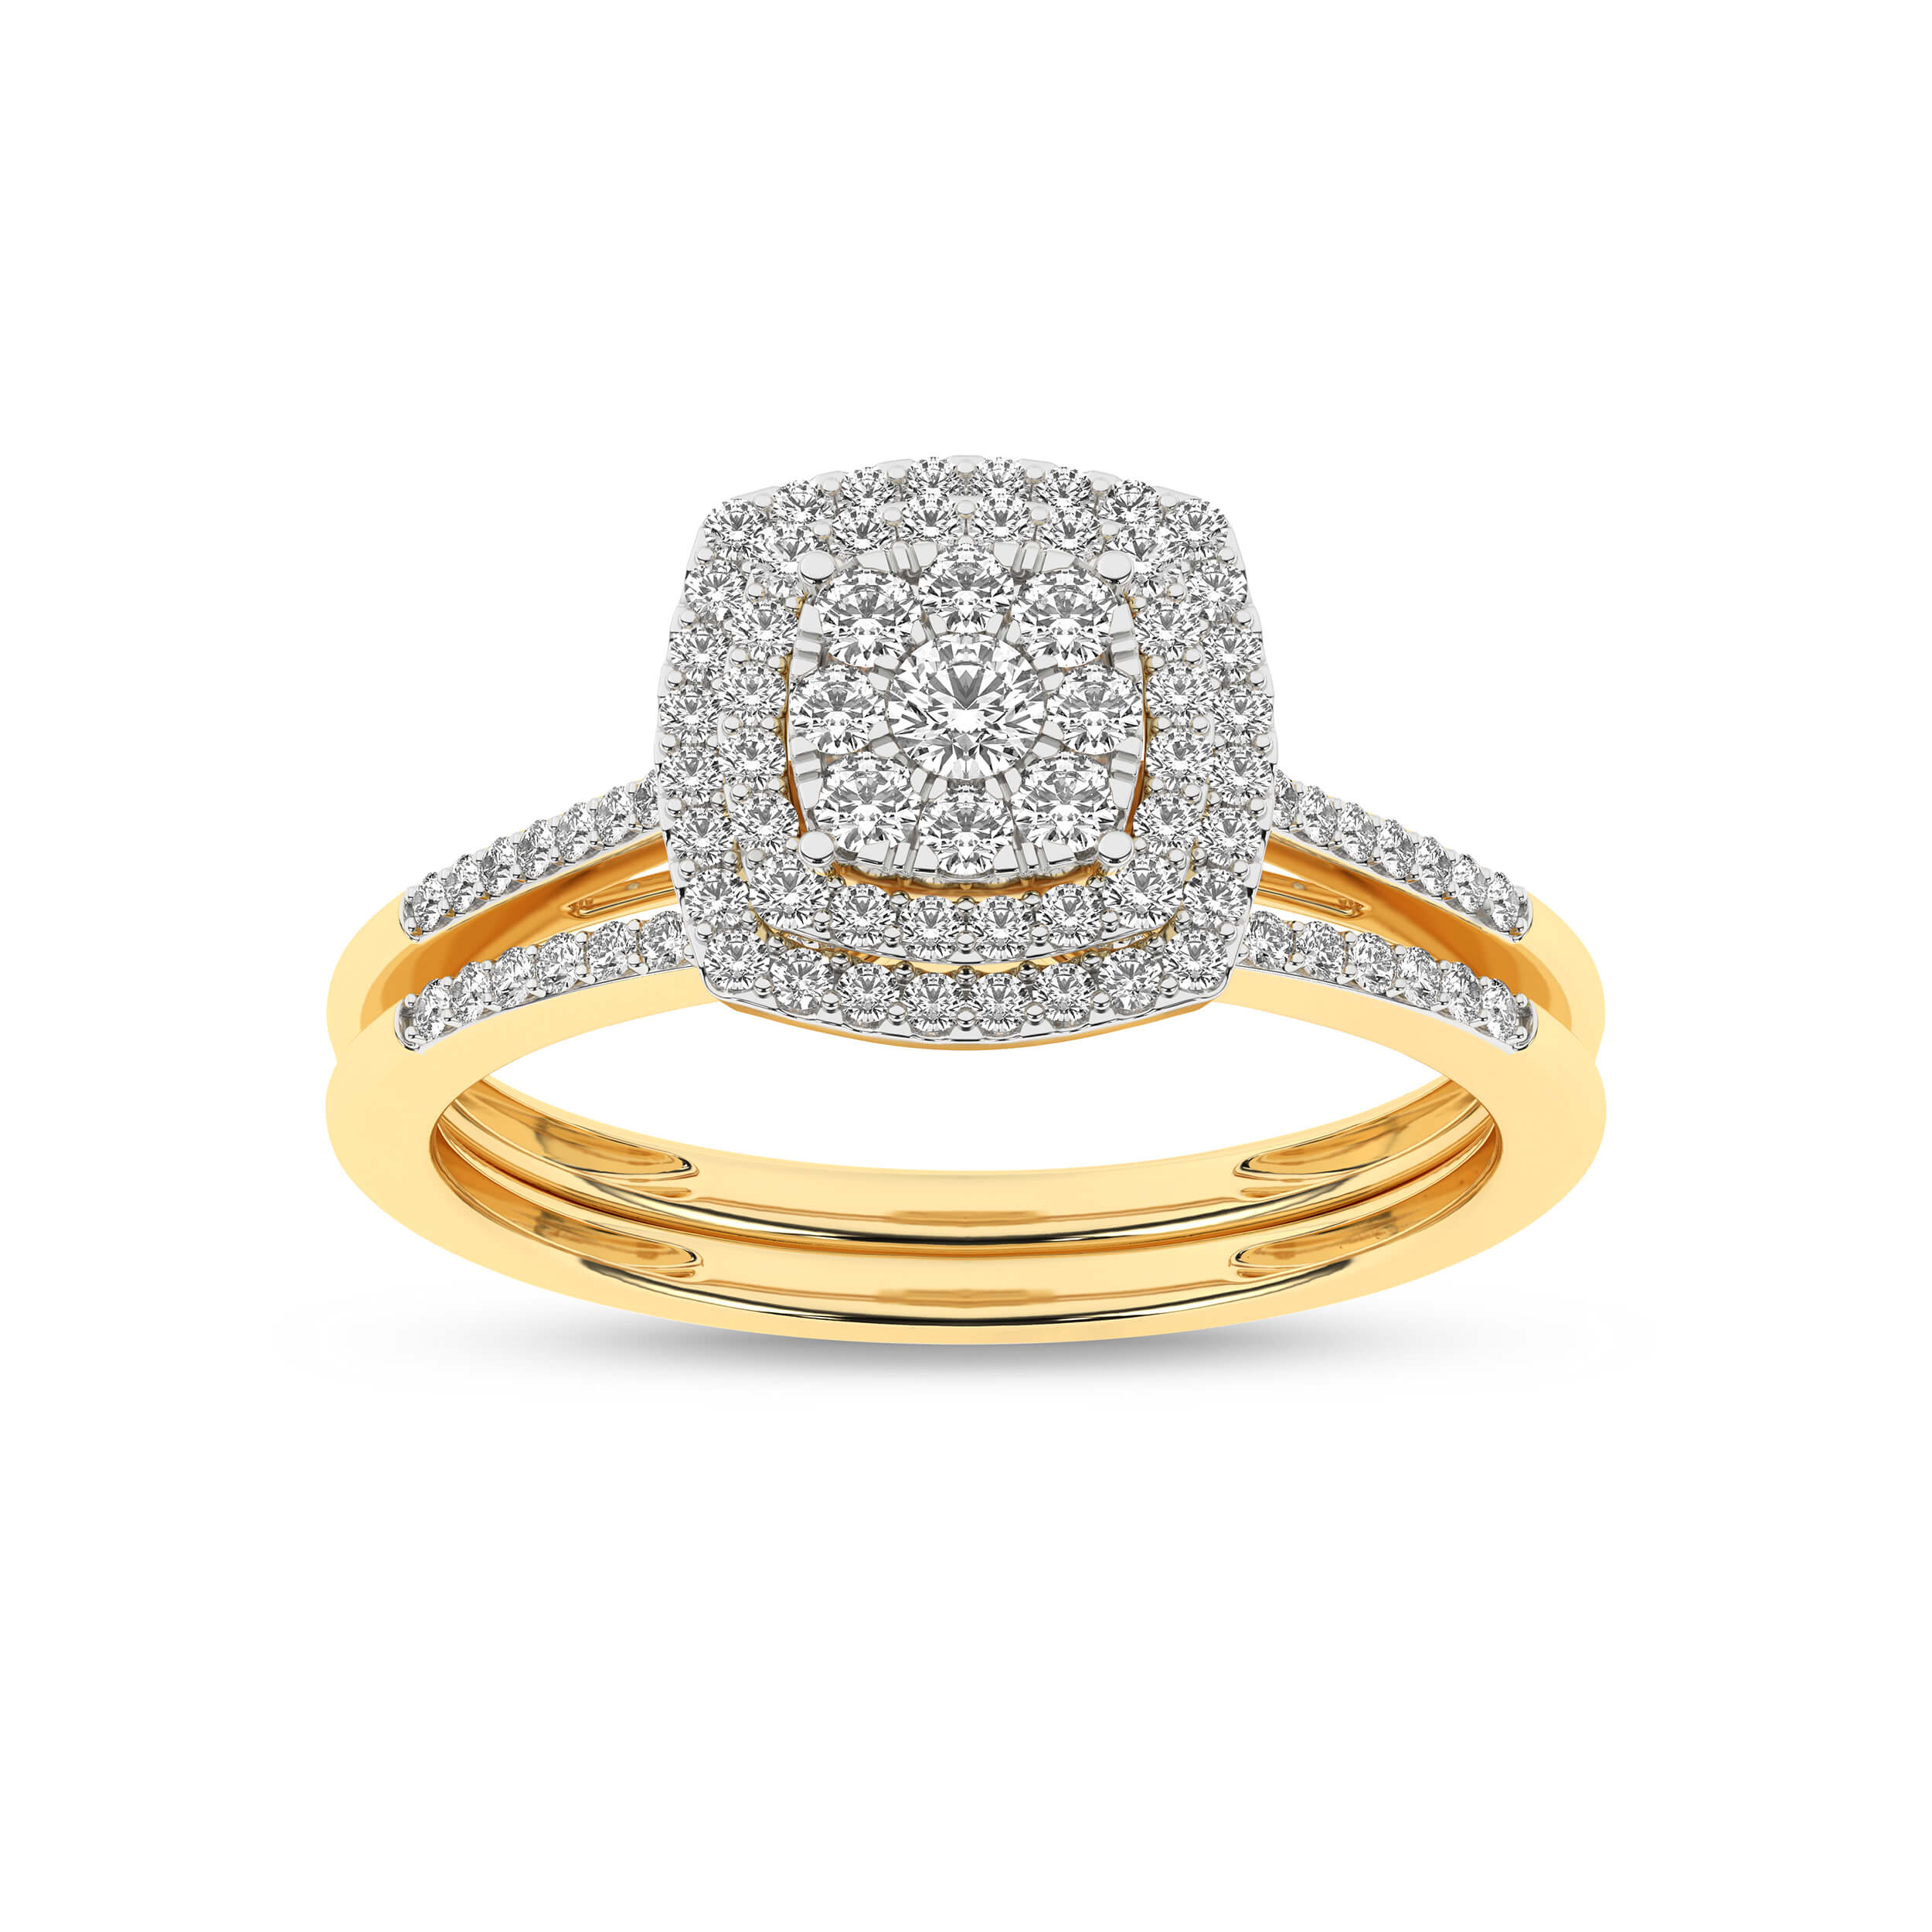 Inel de logodna din Aur Galben 14K cu Diamante 0.33Ct, articol RB15449, previzualizare foto 3